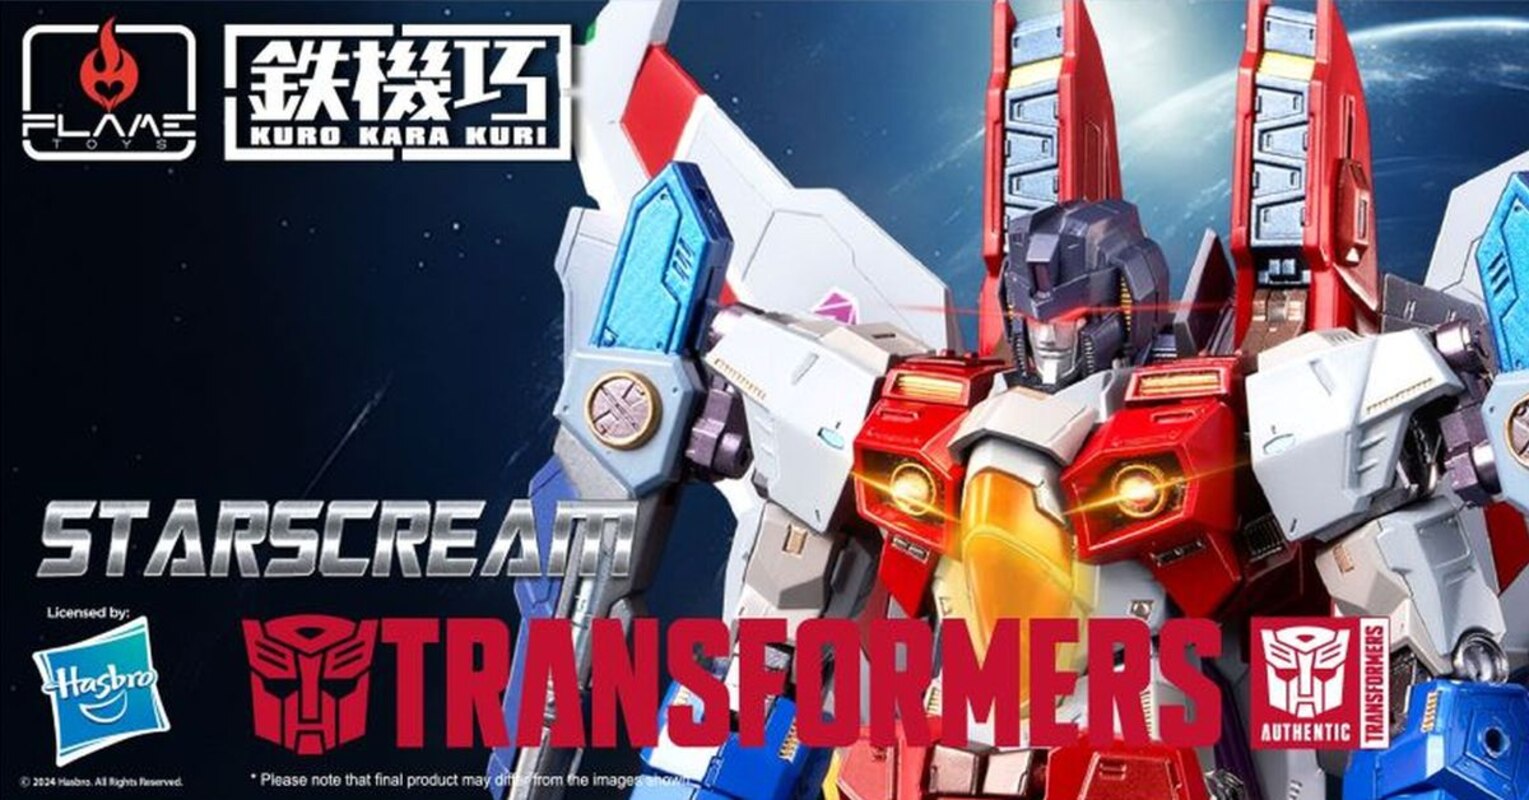 Kuro Kara Kuri Starscream Official Images & Details from Flame Toys Transformers